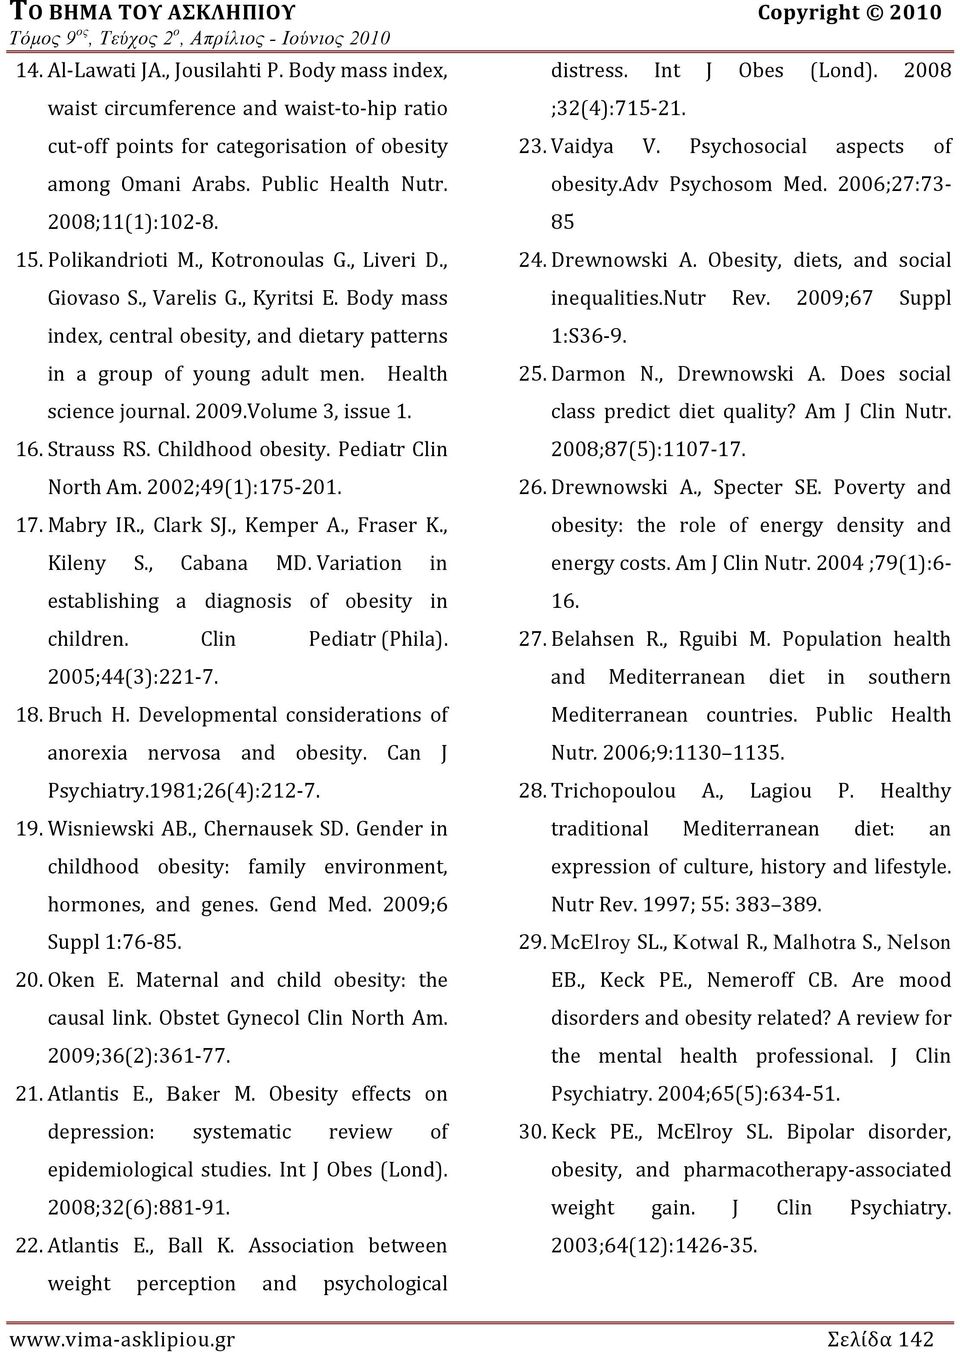 science journal. 2009.Volume 3, issue 1. Health 16. Strauss RS. Childhood obesity. Pediatr Clin North Am. 2002;49(1):175 201. 17. Mabry IR., Clark SJ., Kemper A., Fraser K., Kileny S., Cabana MD.